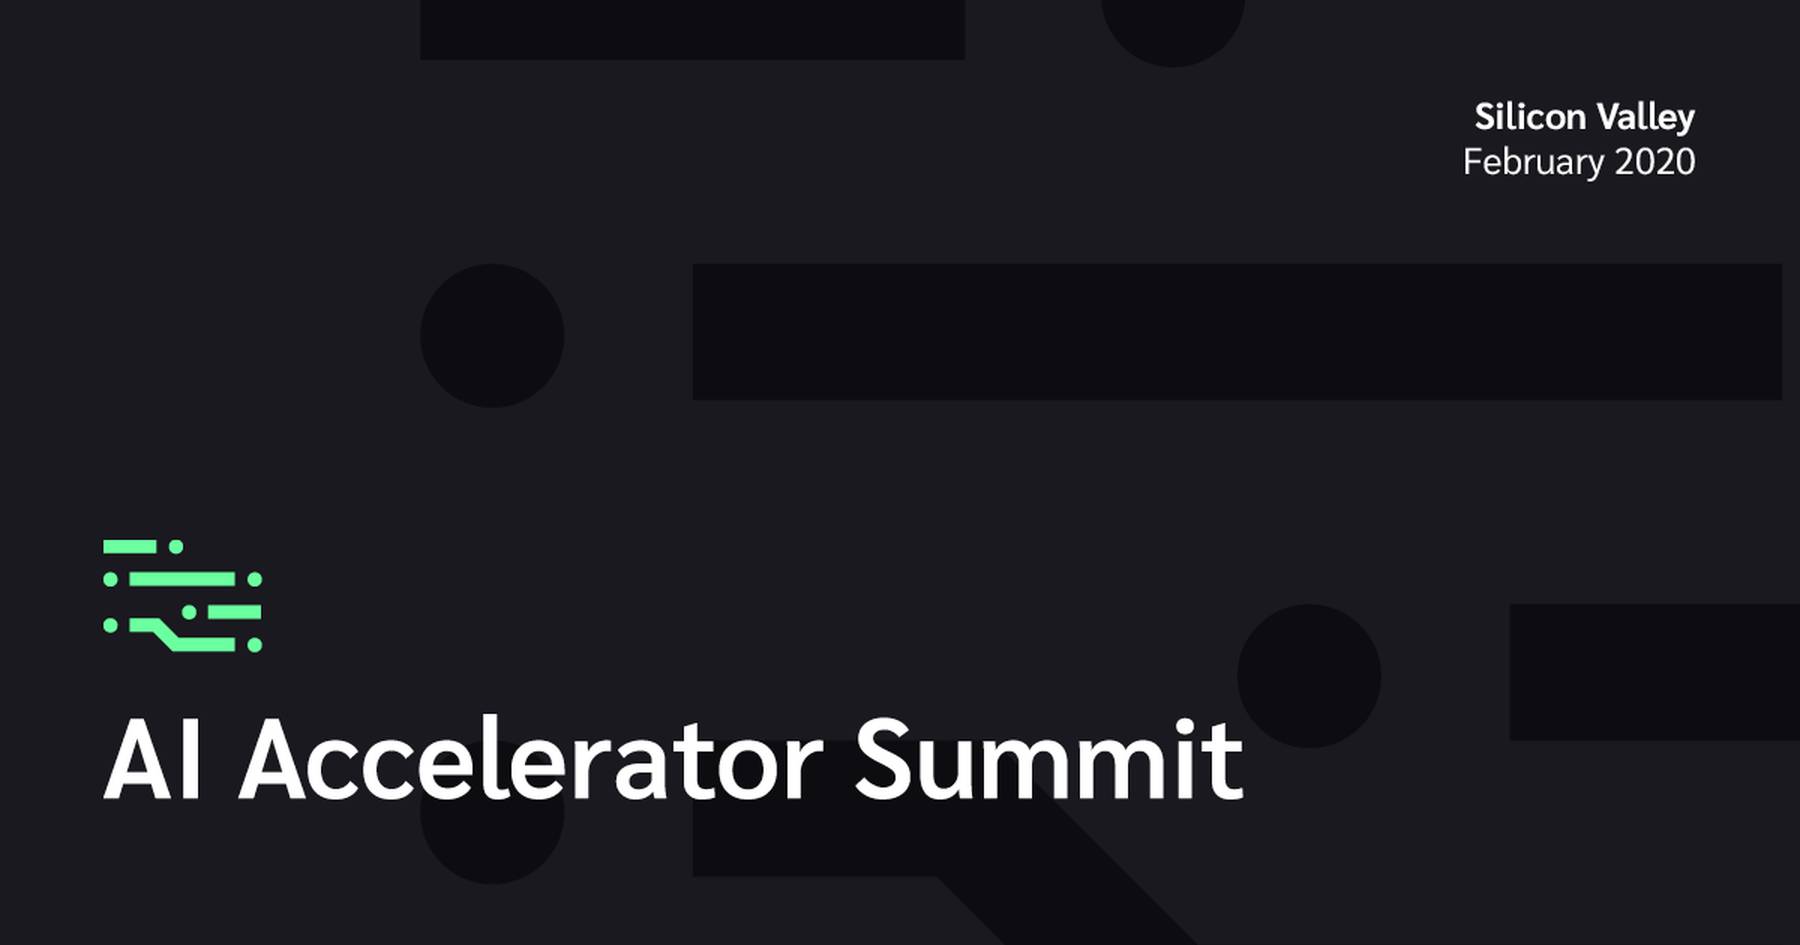 AI Accelerator Summit Silicon Valley 2020